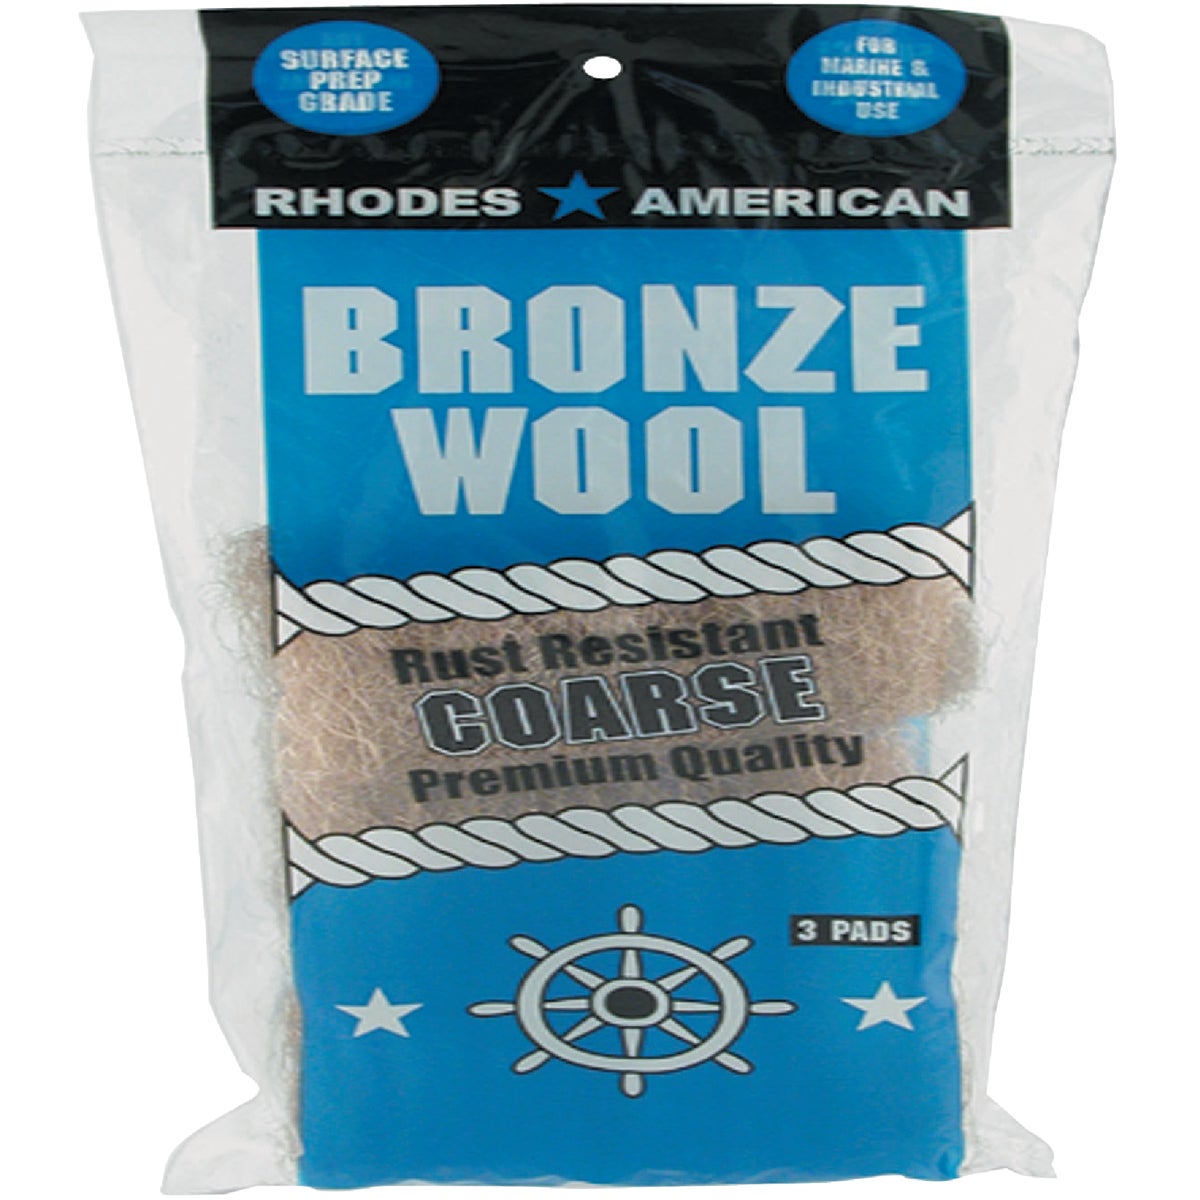 Homax Coarse Bronze Wool (3-Pack)